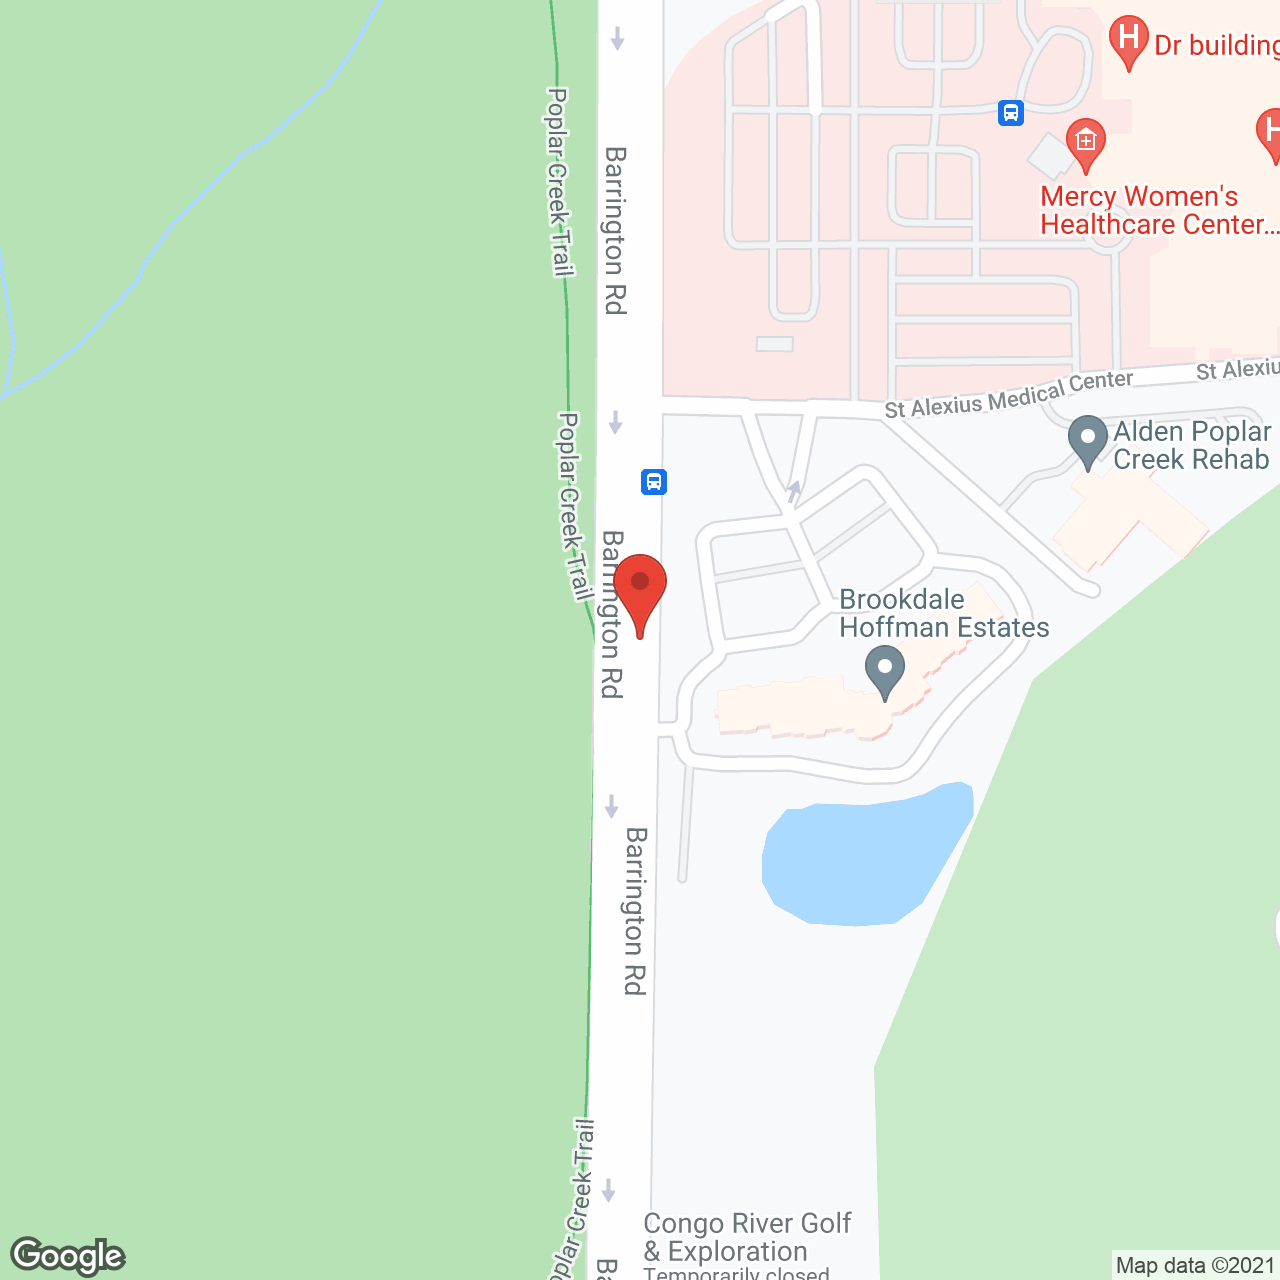 Brookdale Hoffman Estates in google map